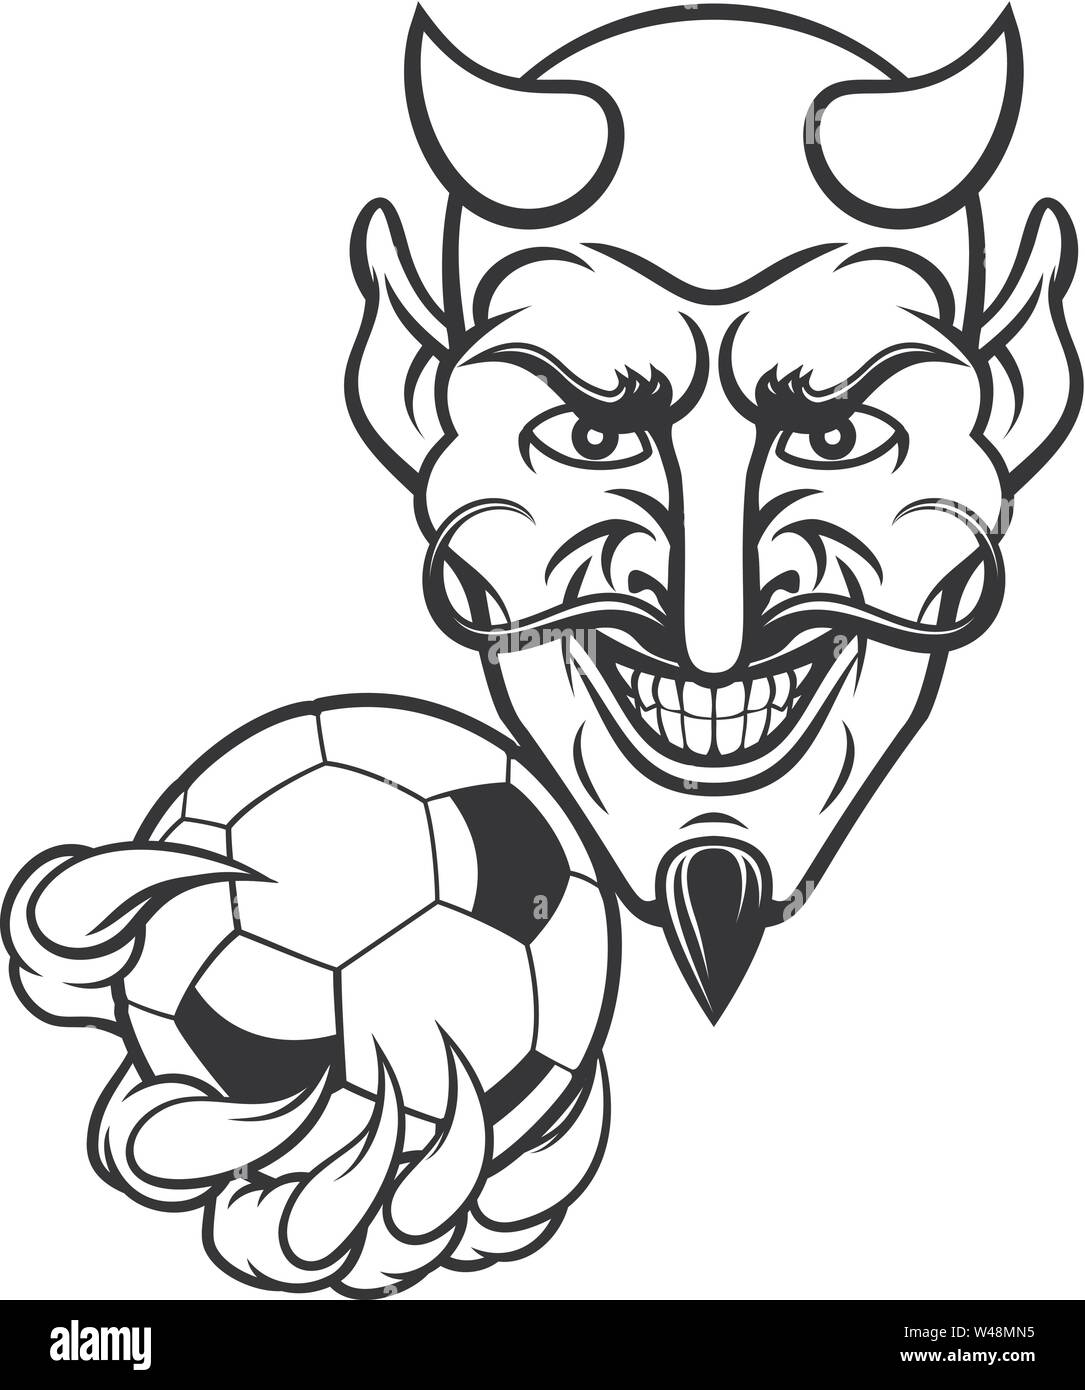 Football Soccer diable Mascot Illustration de Vecteur